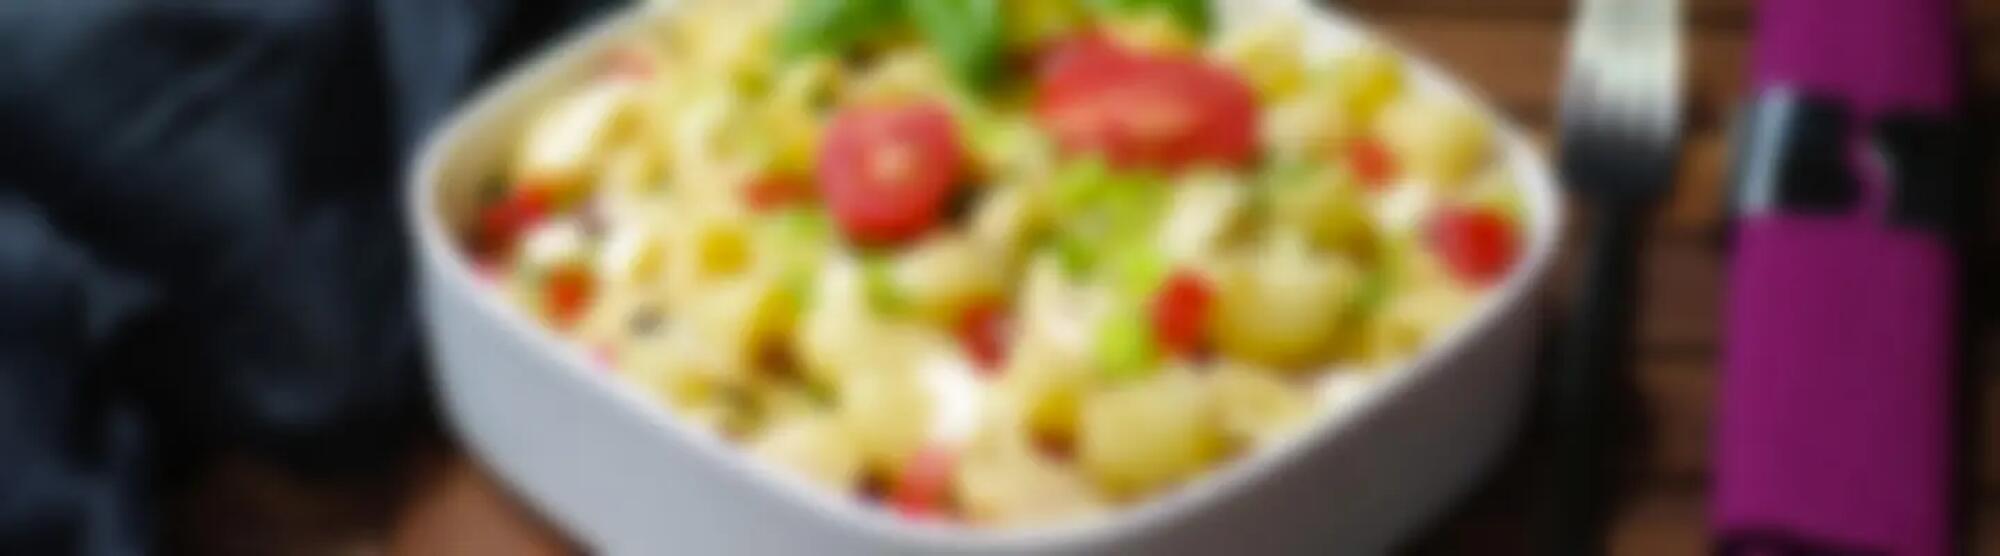 Recette : Salade de pâtes méditerranéenne au fromage